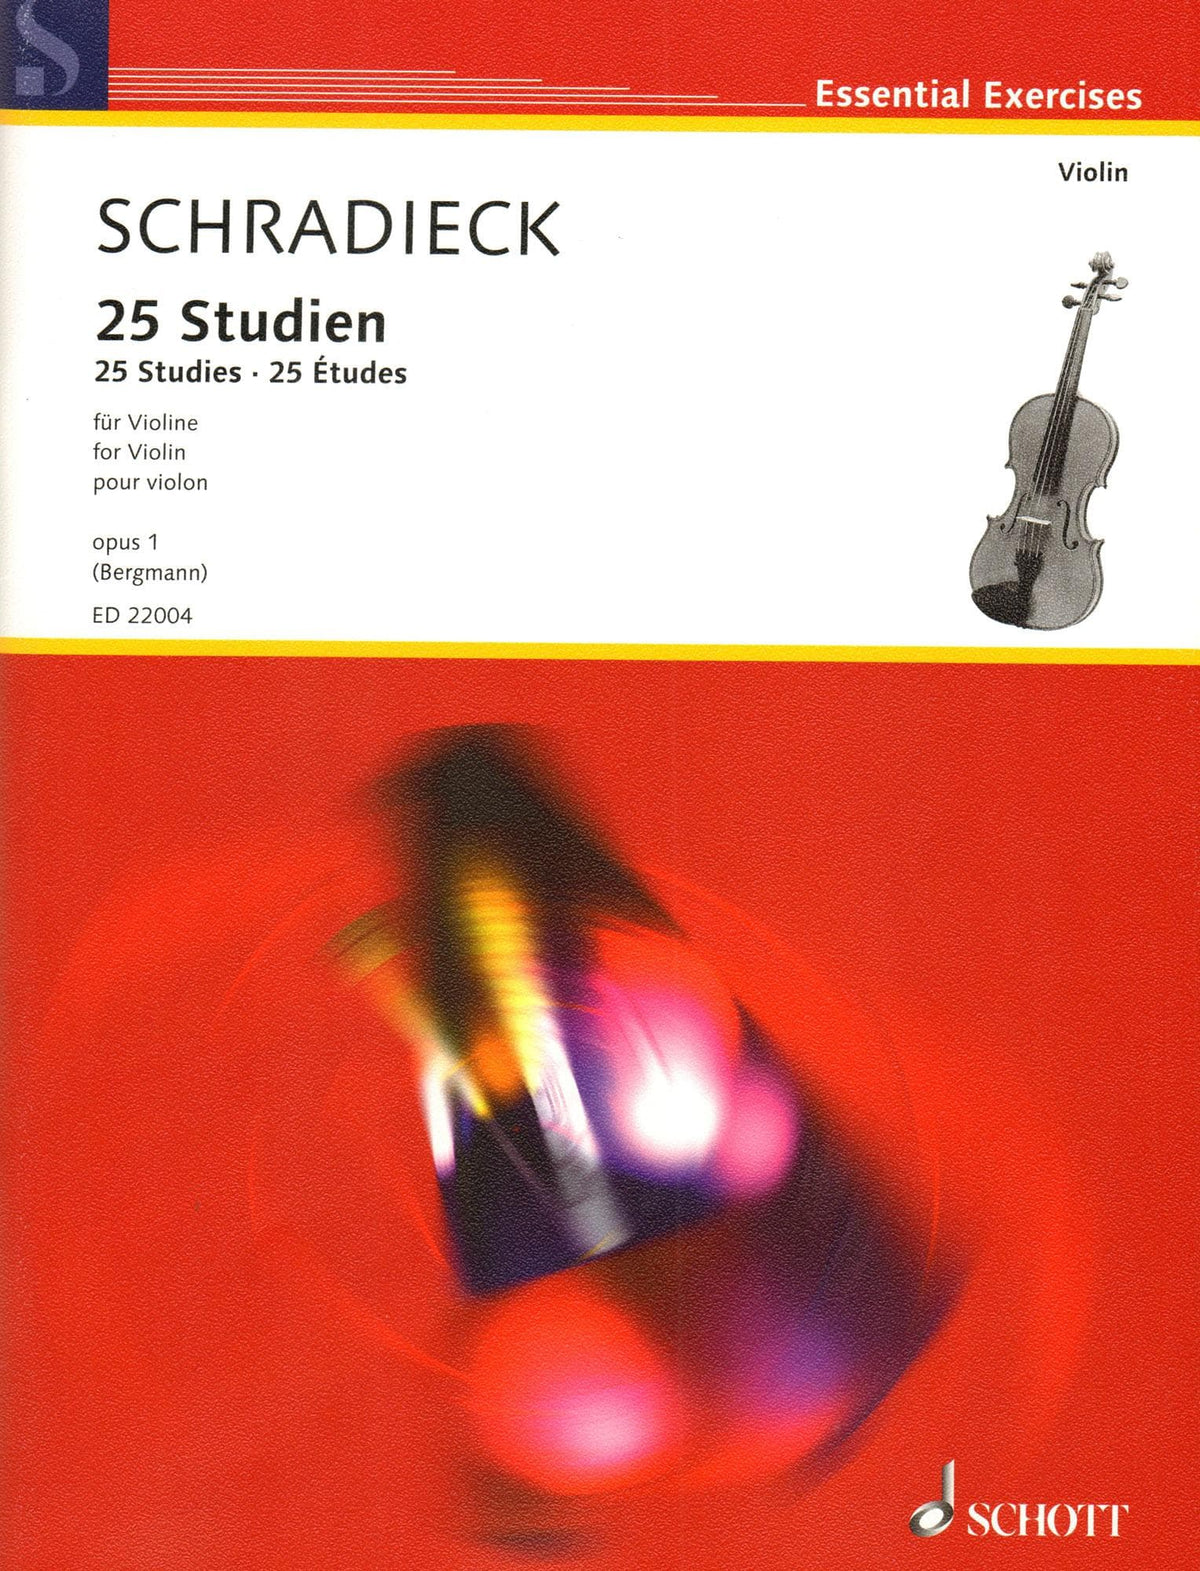 Schradieck, H - 25 Studies for Violin, Opus 1 - edited by Benjamin Bergmann - Schott Edition